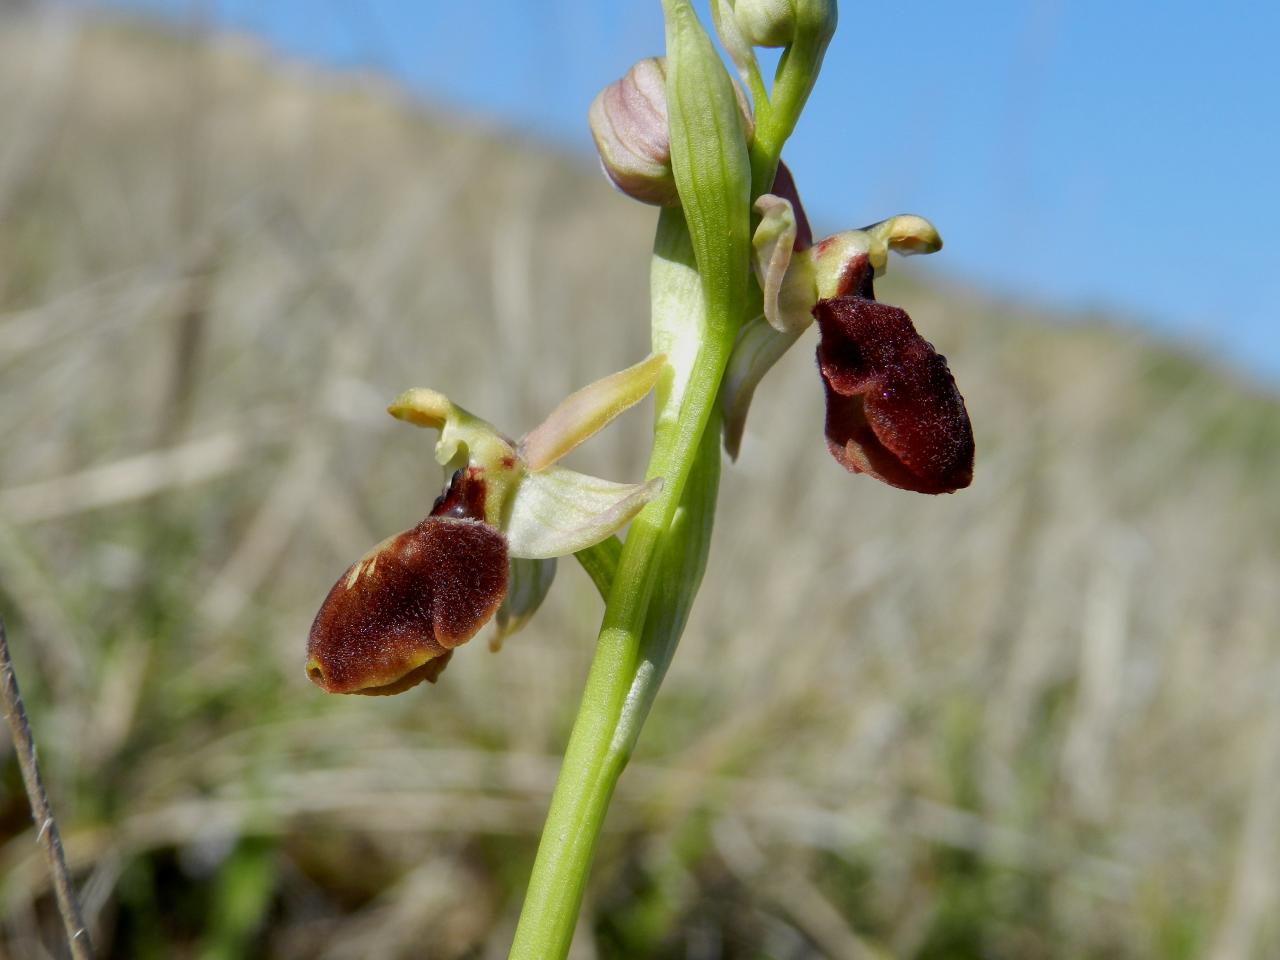 Ophrys virescens, Ophrys virescent (Malras 11)